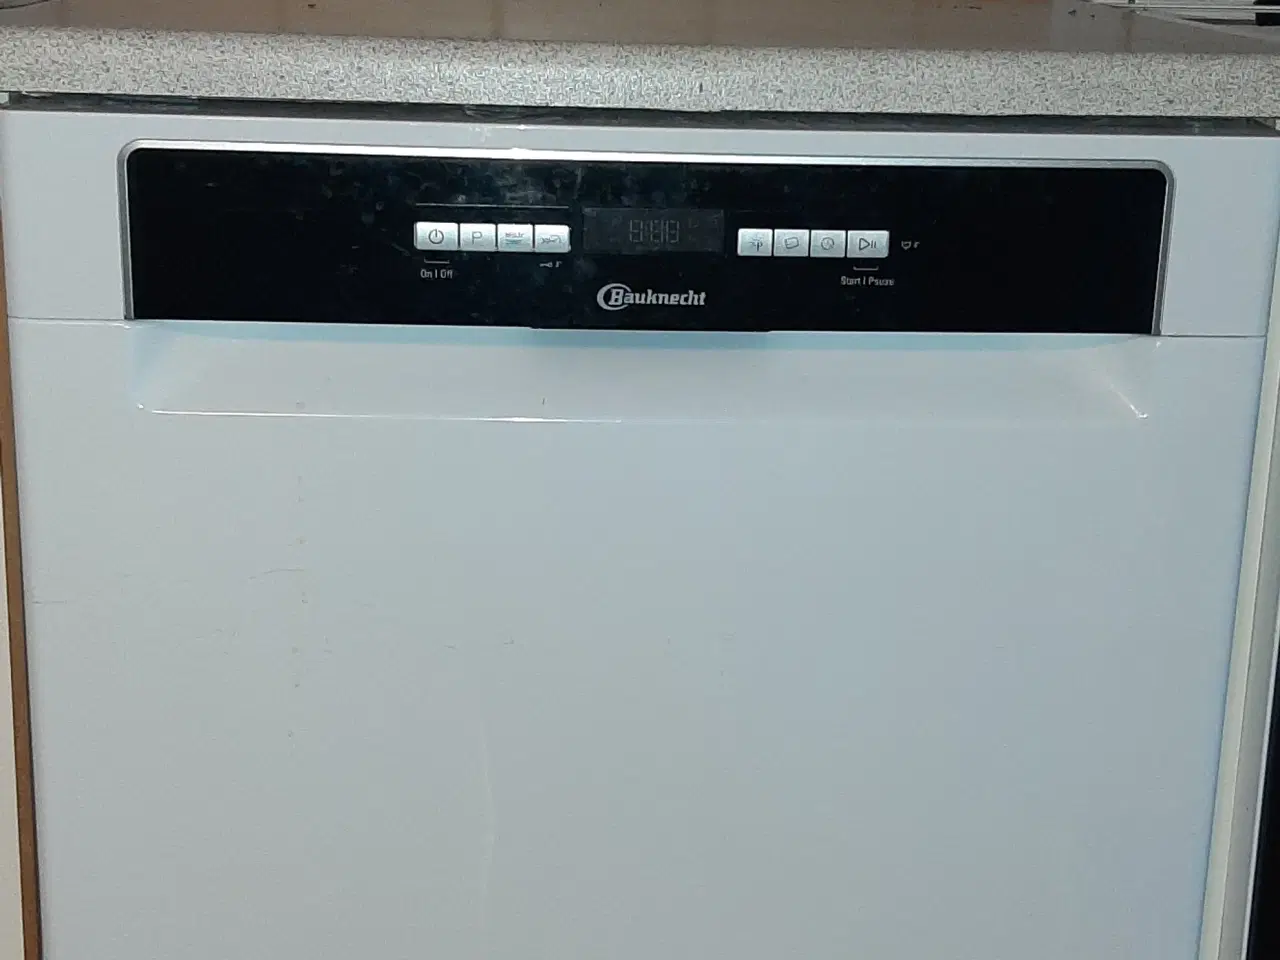 Billede 1 - Velholdt Bauknecht opvaskemaskine